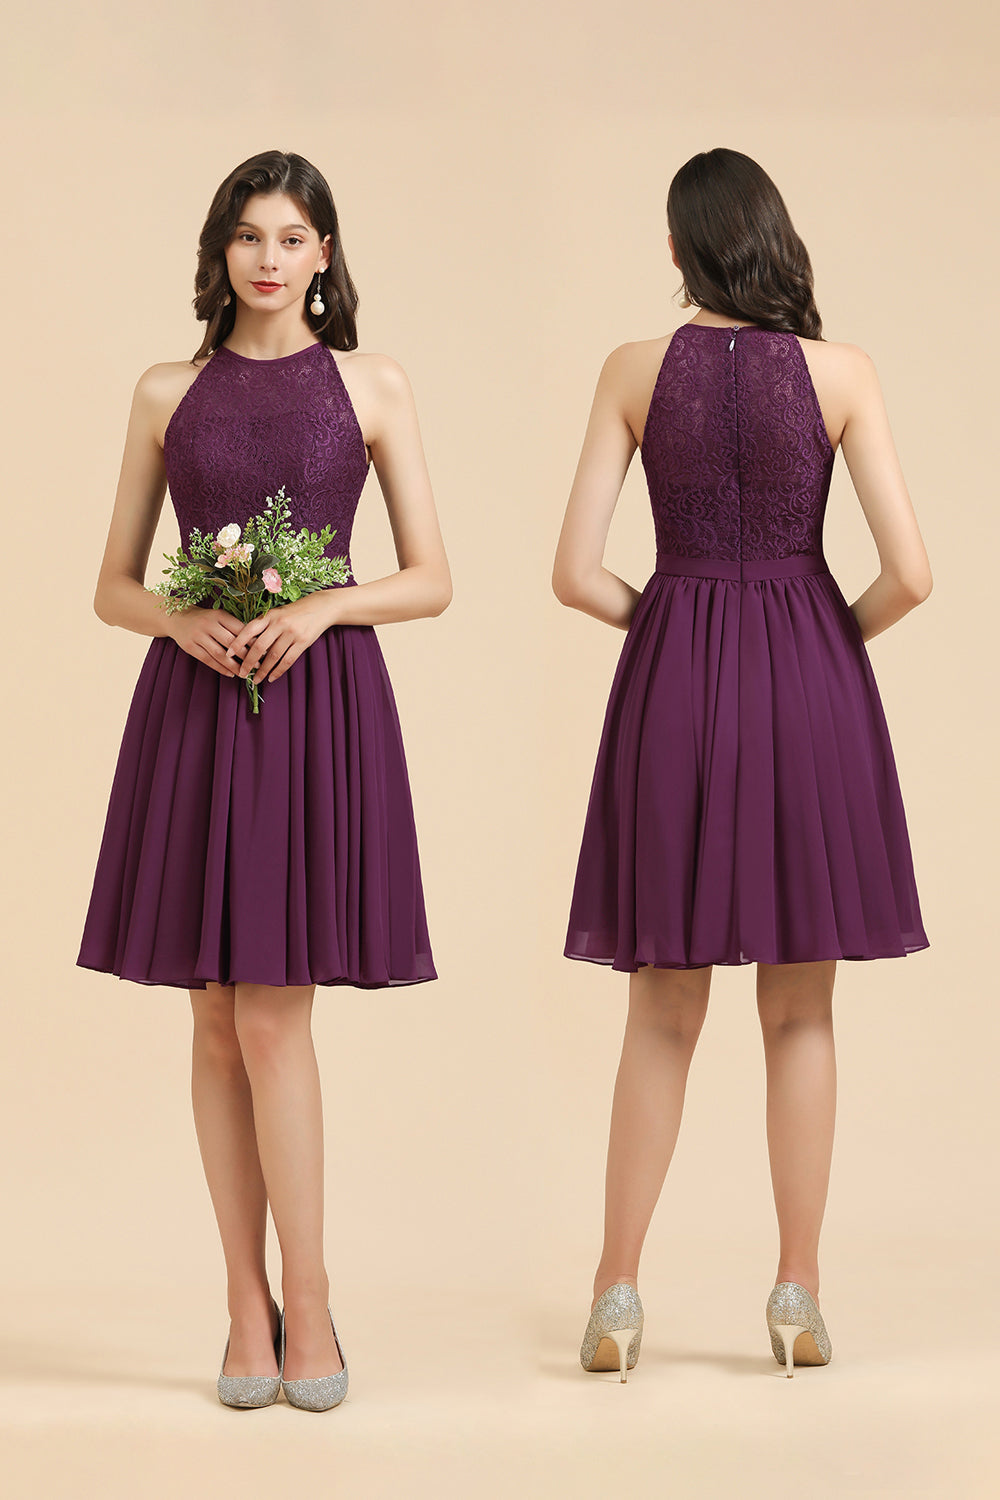 Halter Lace Bridesmaid Dress Chiffon Sleeveless Short Dress-27dress